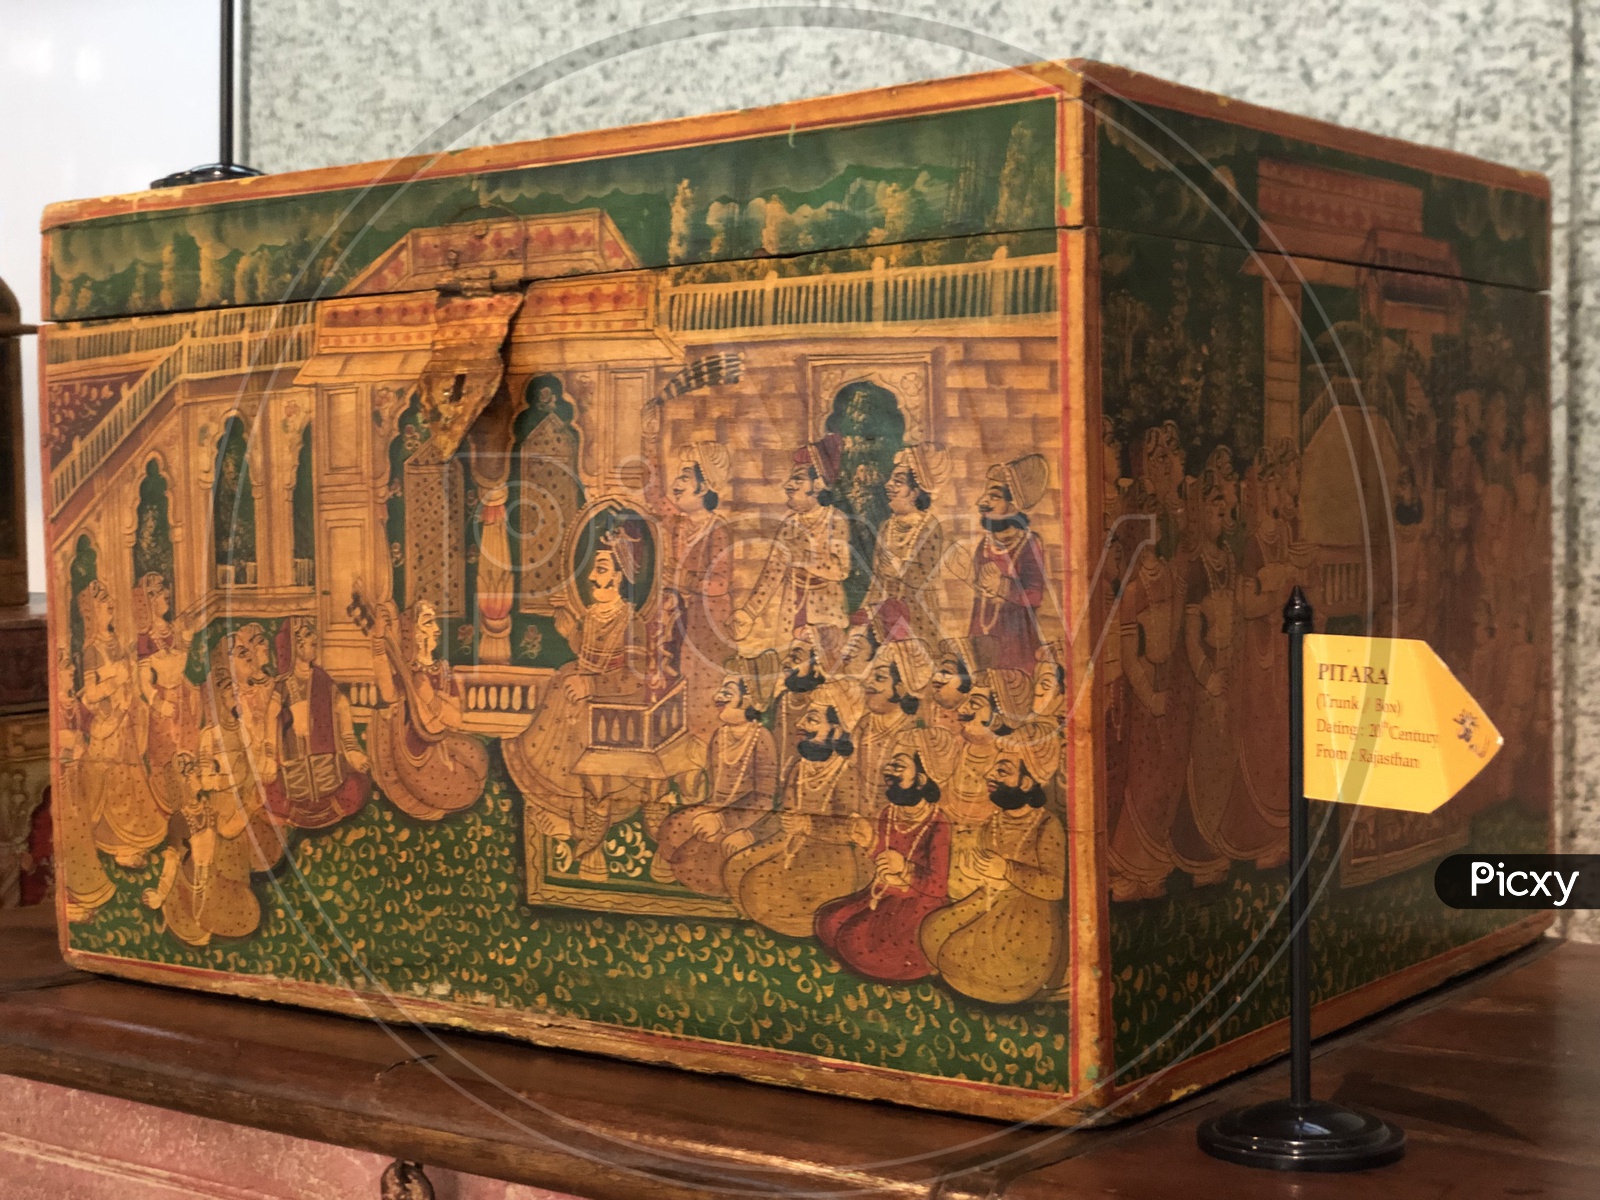 Wooden Box or Pitara At jaya he museum